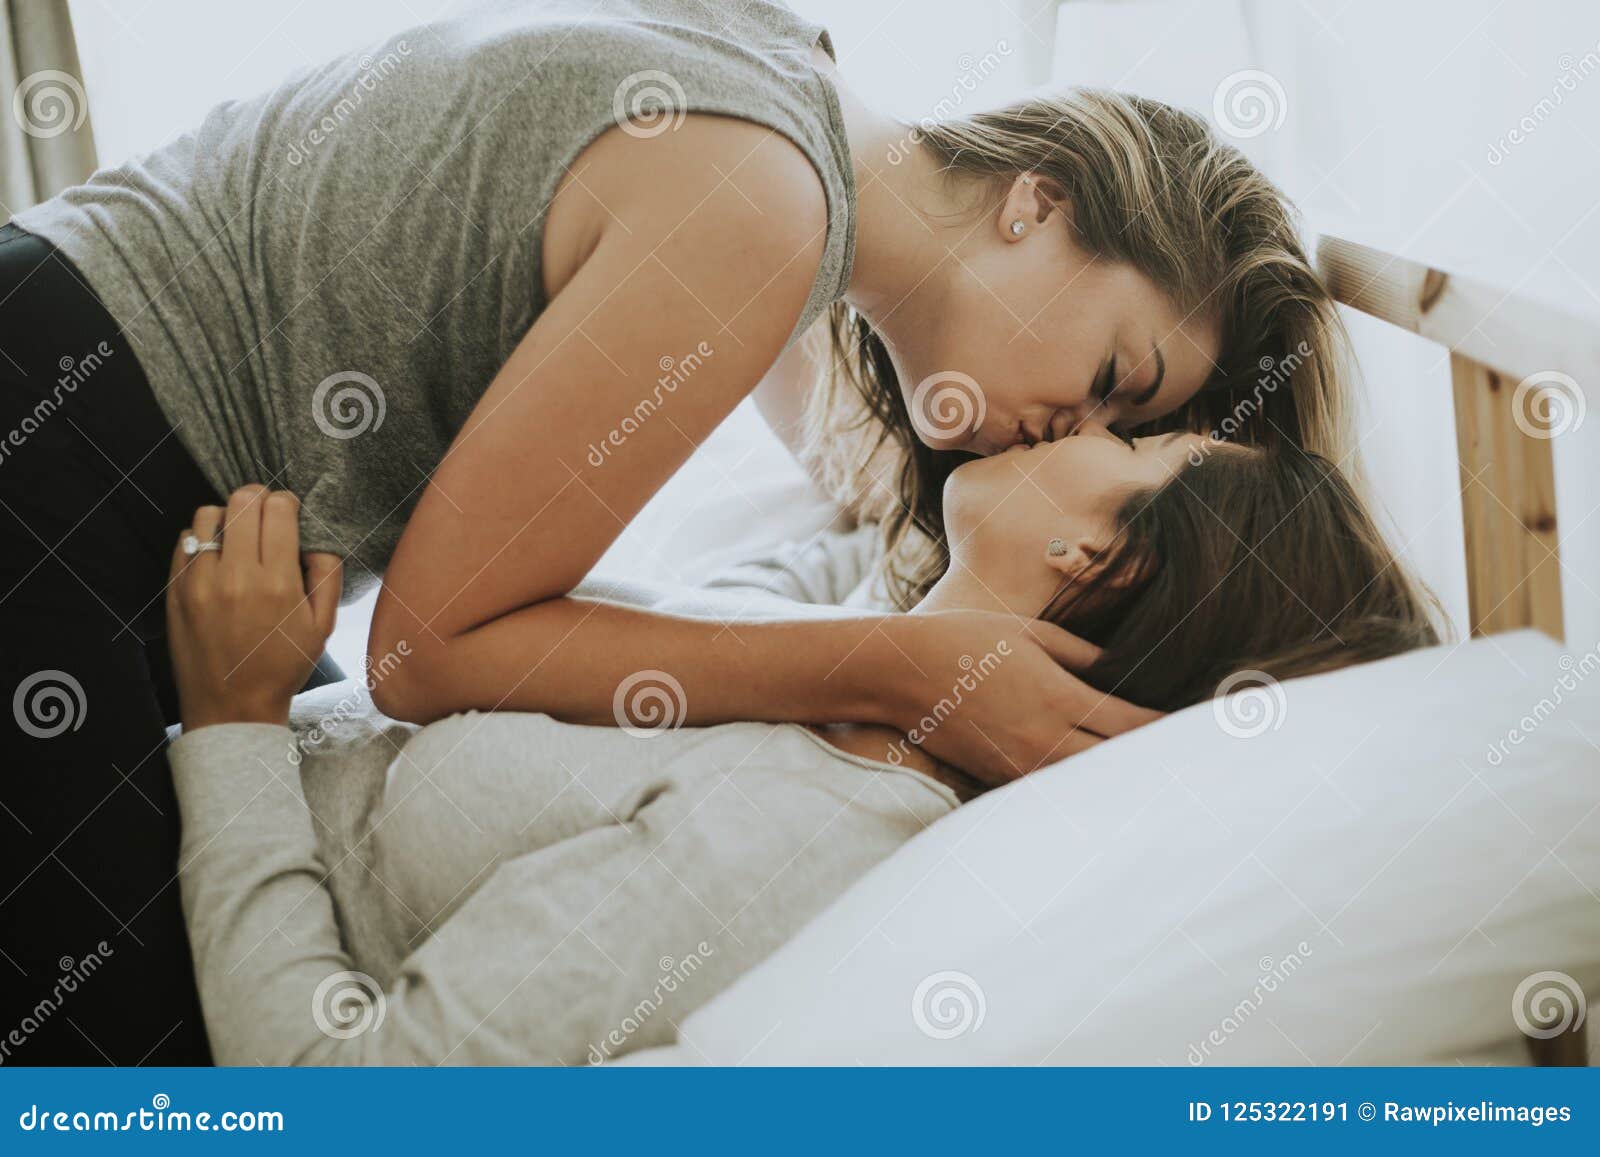 bed kissing lesbian girls in